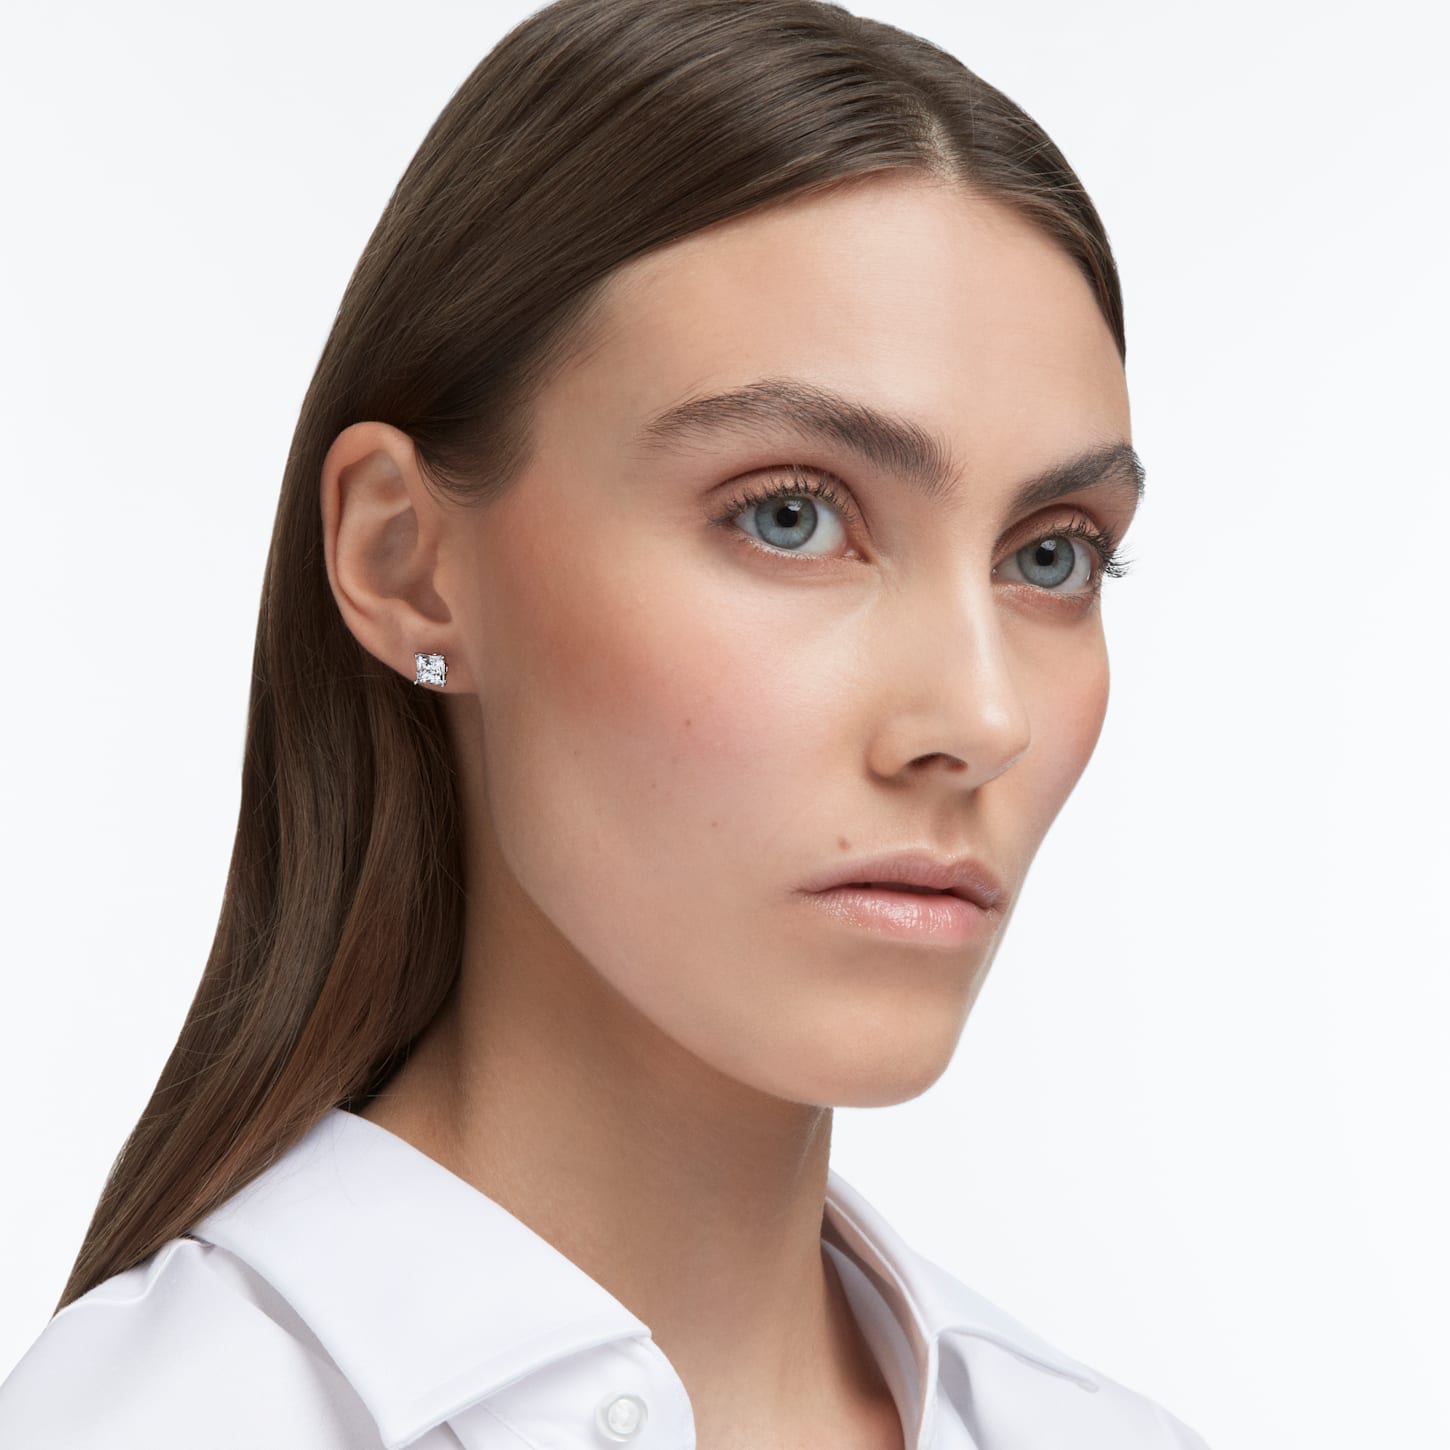 Attract - White Silver - Square - Stud earrings - Swarovski